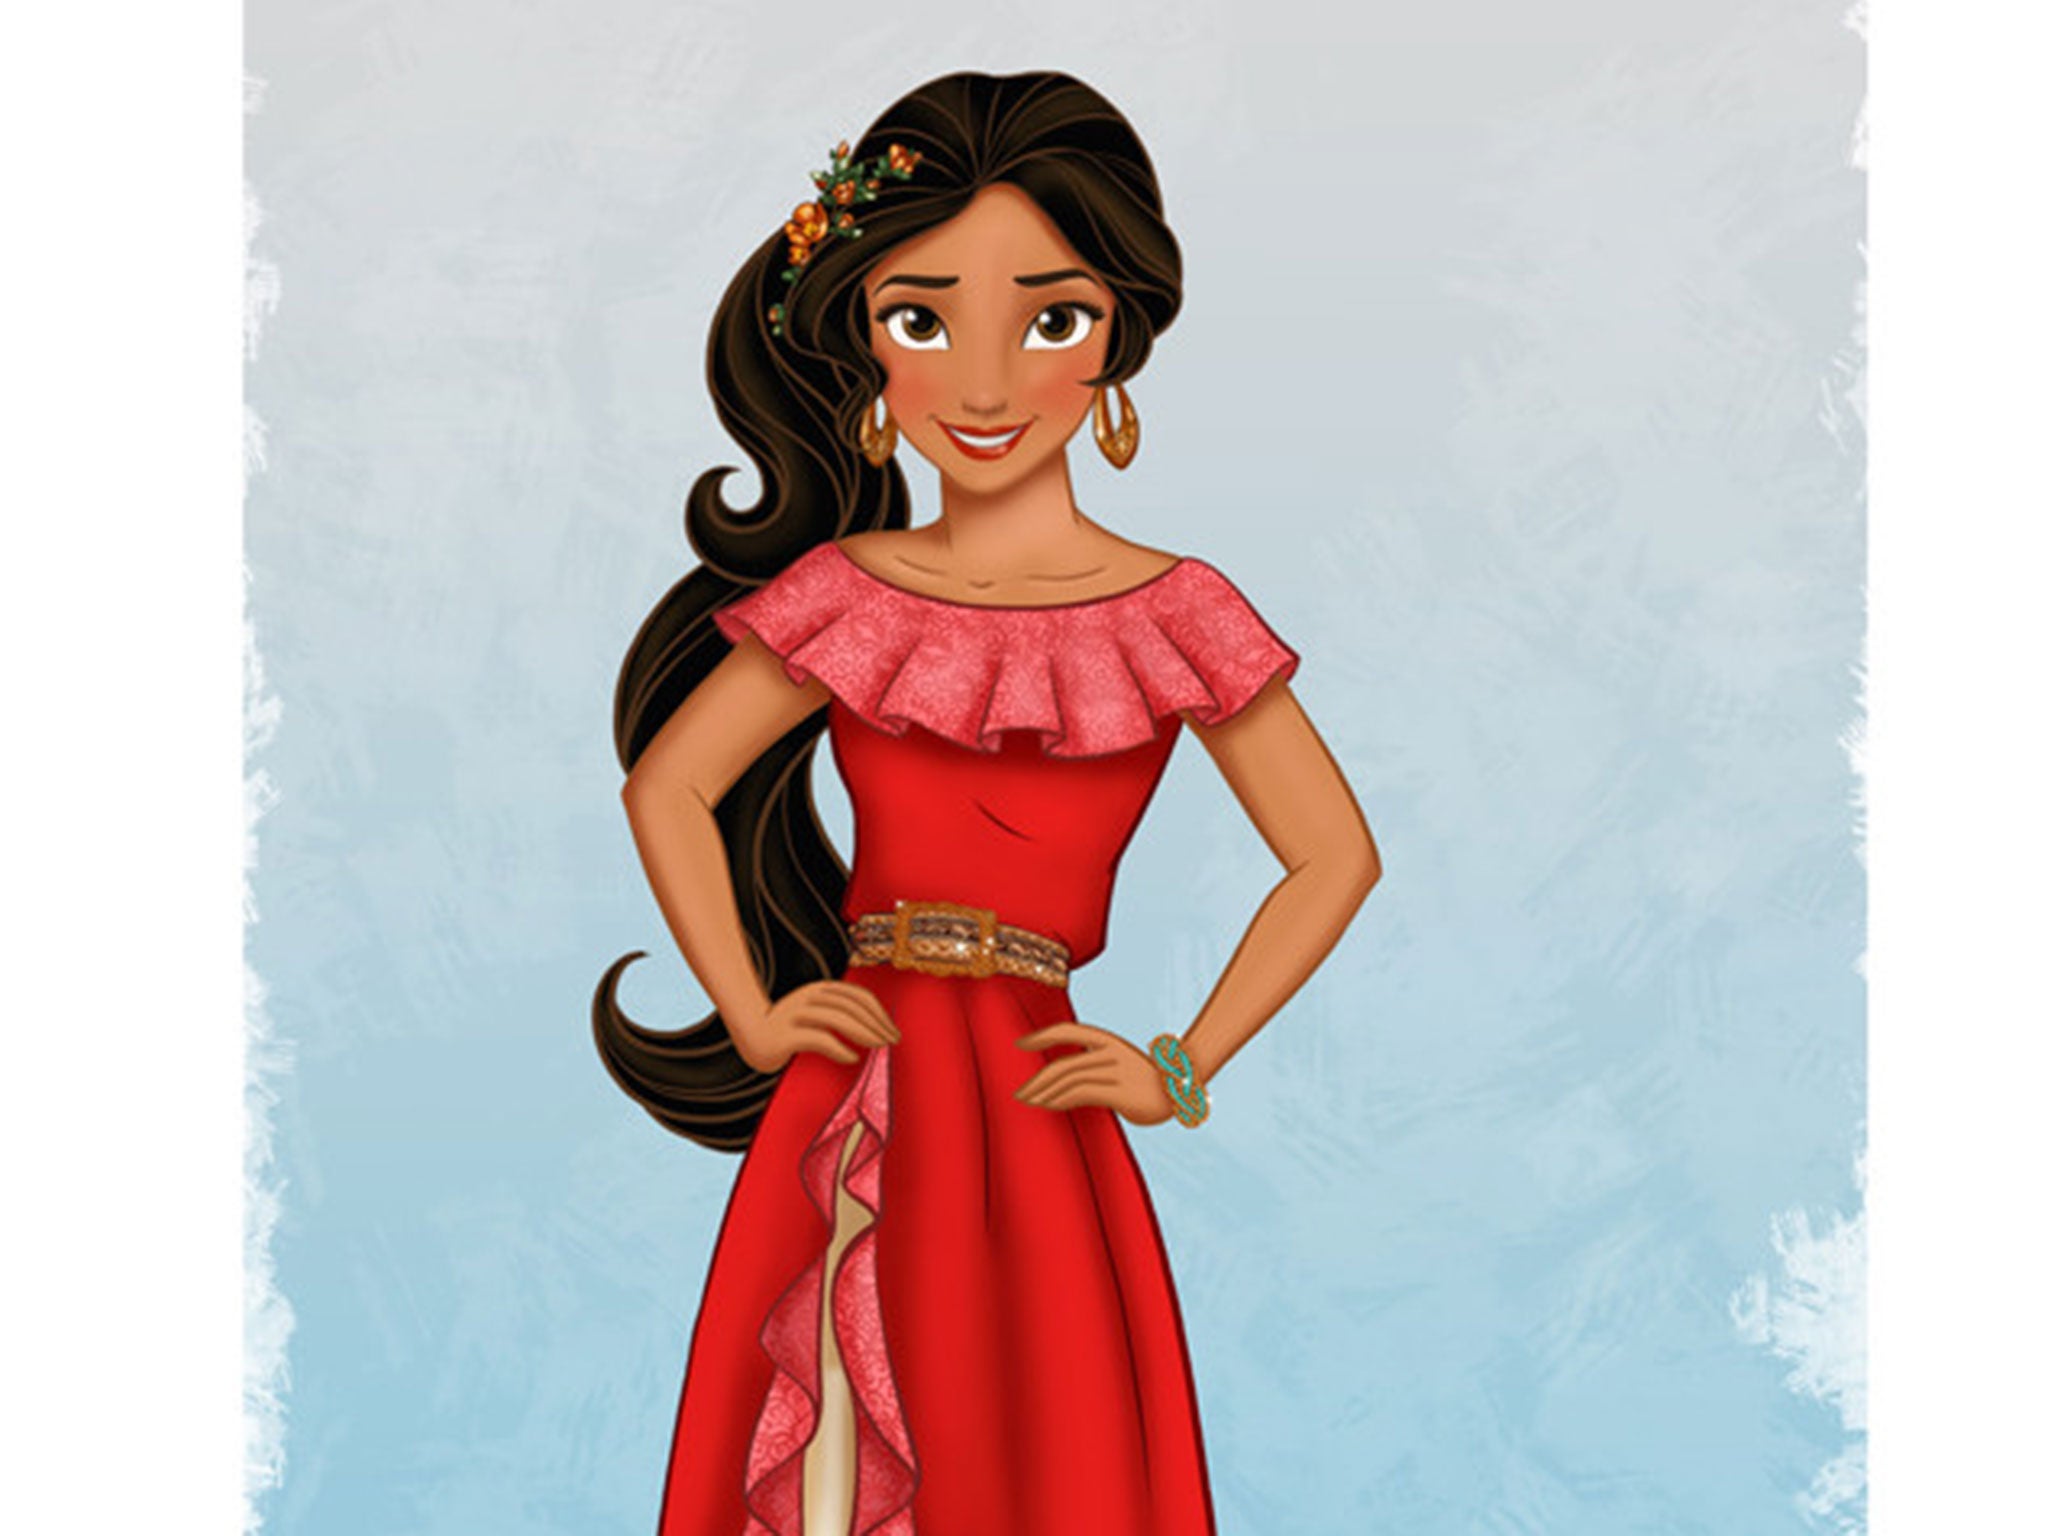 New Latina Disney princess Elena of Avalor